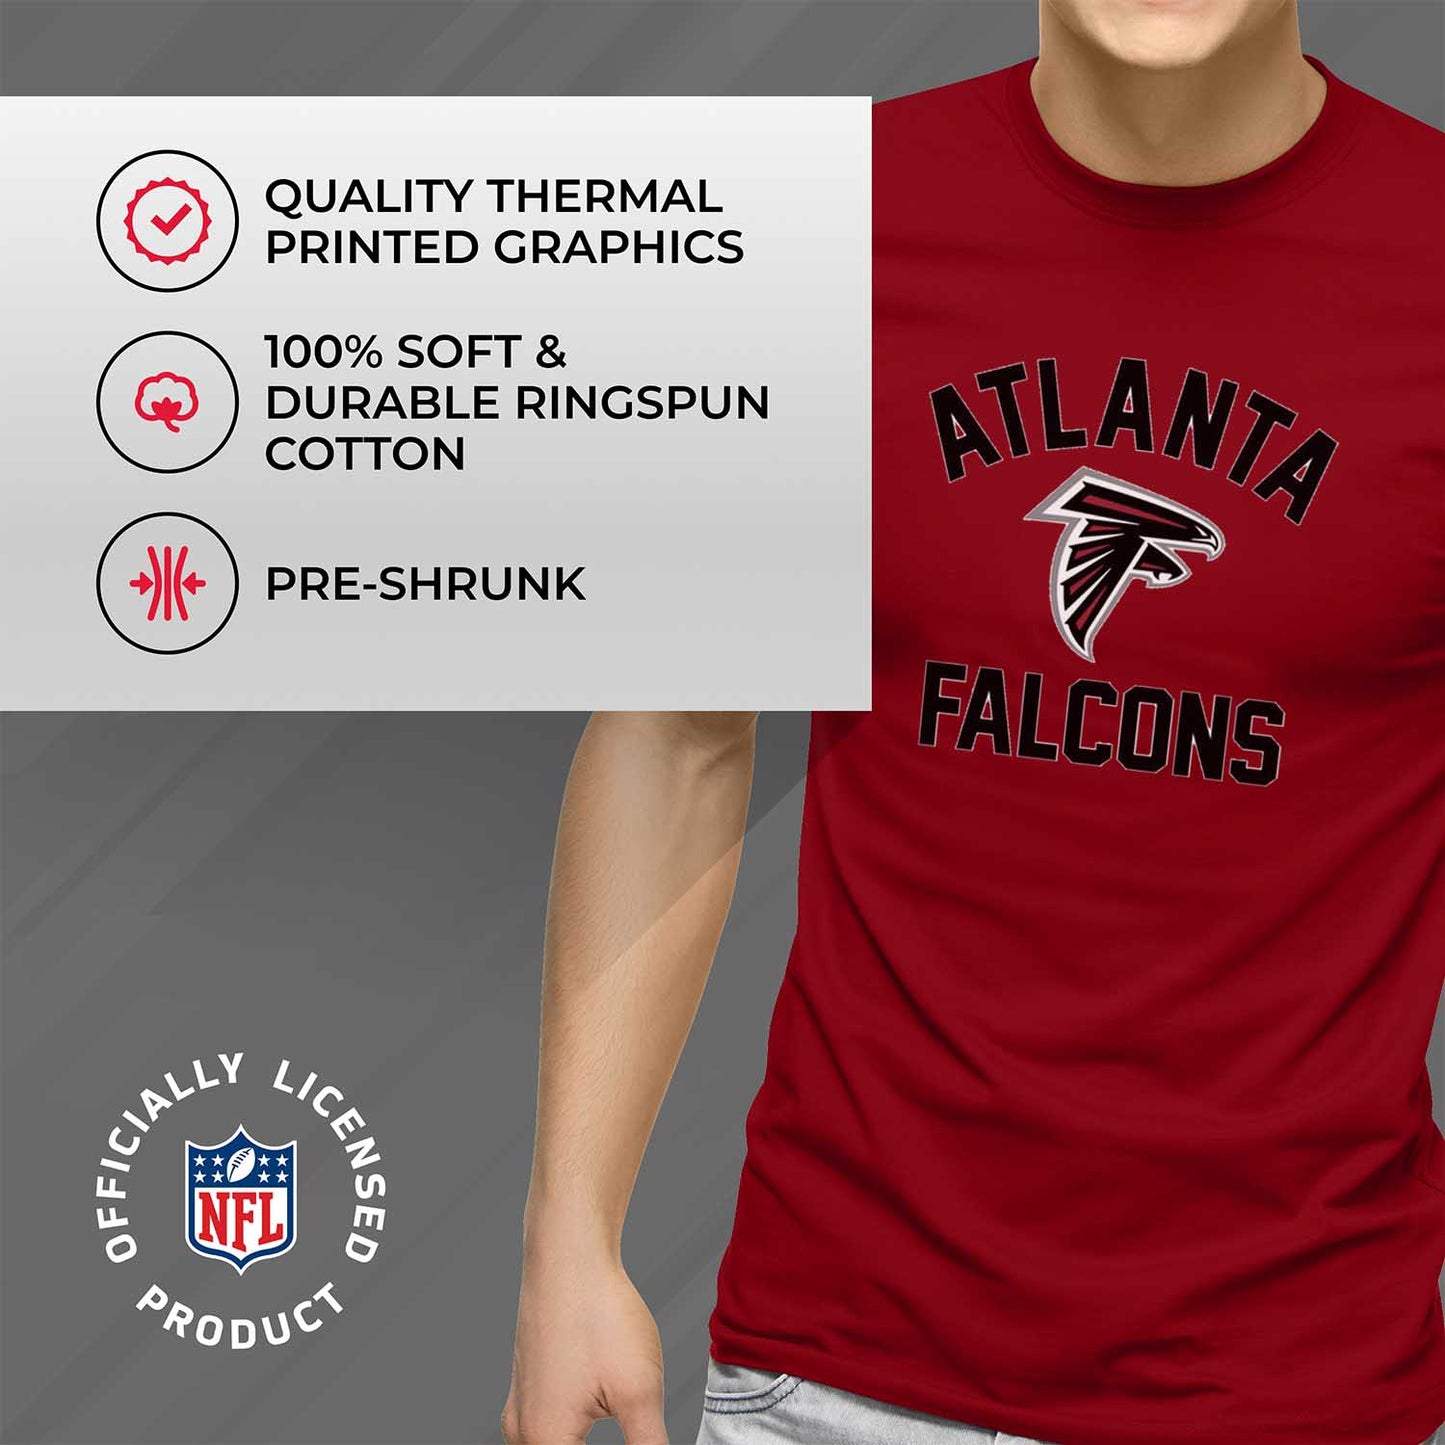 Atlanta Falcons NFL Adult Gameday T-Shirt - Red